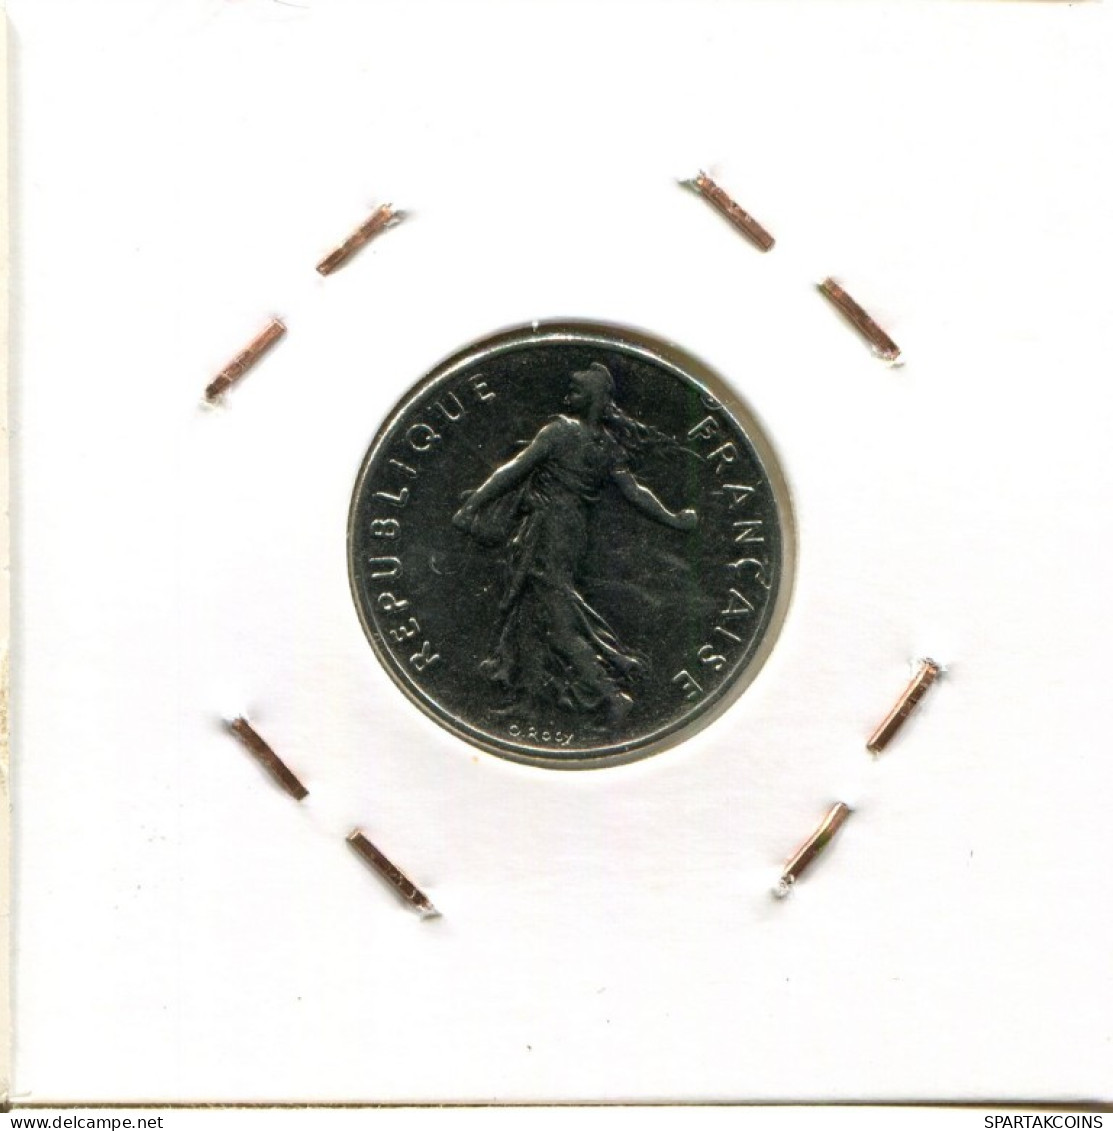 1/2 FRANC 1978 FRANCE Coin French Coin #AM924.U.A - 1/2 Franc